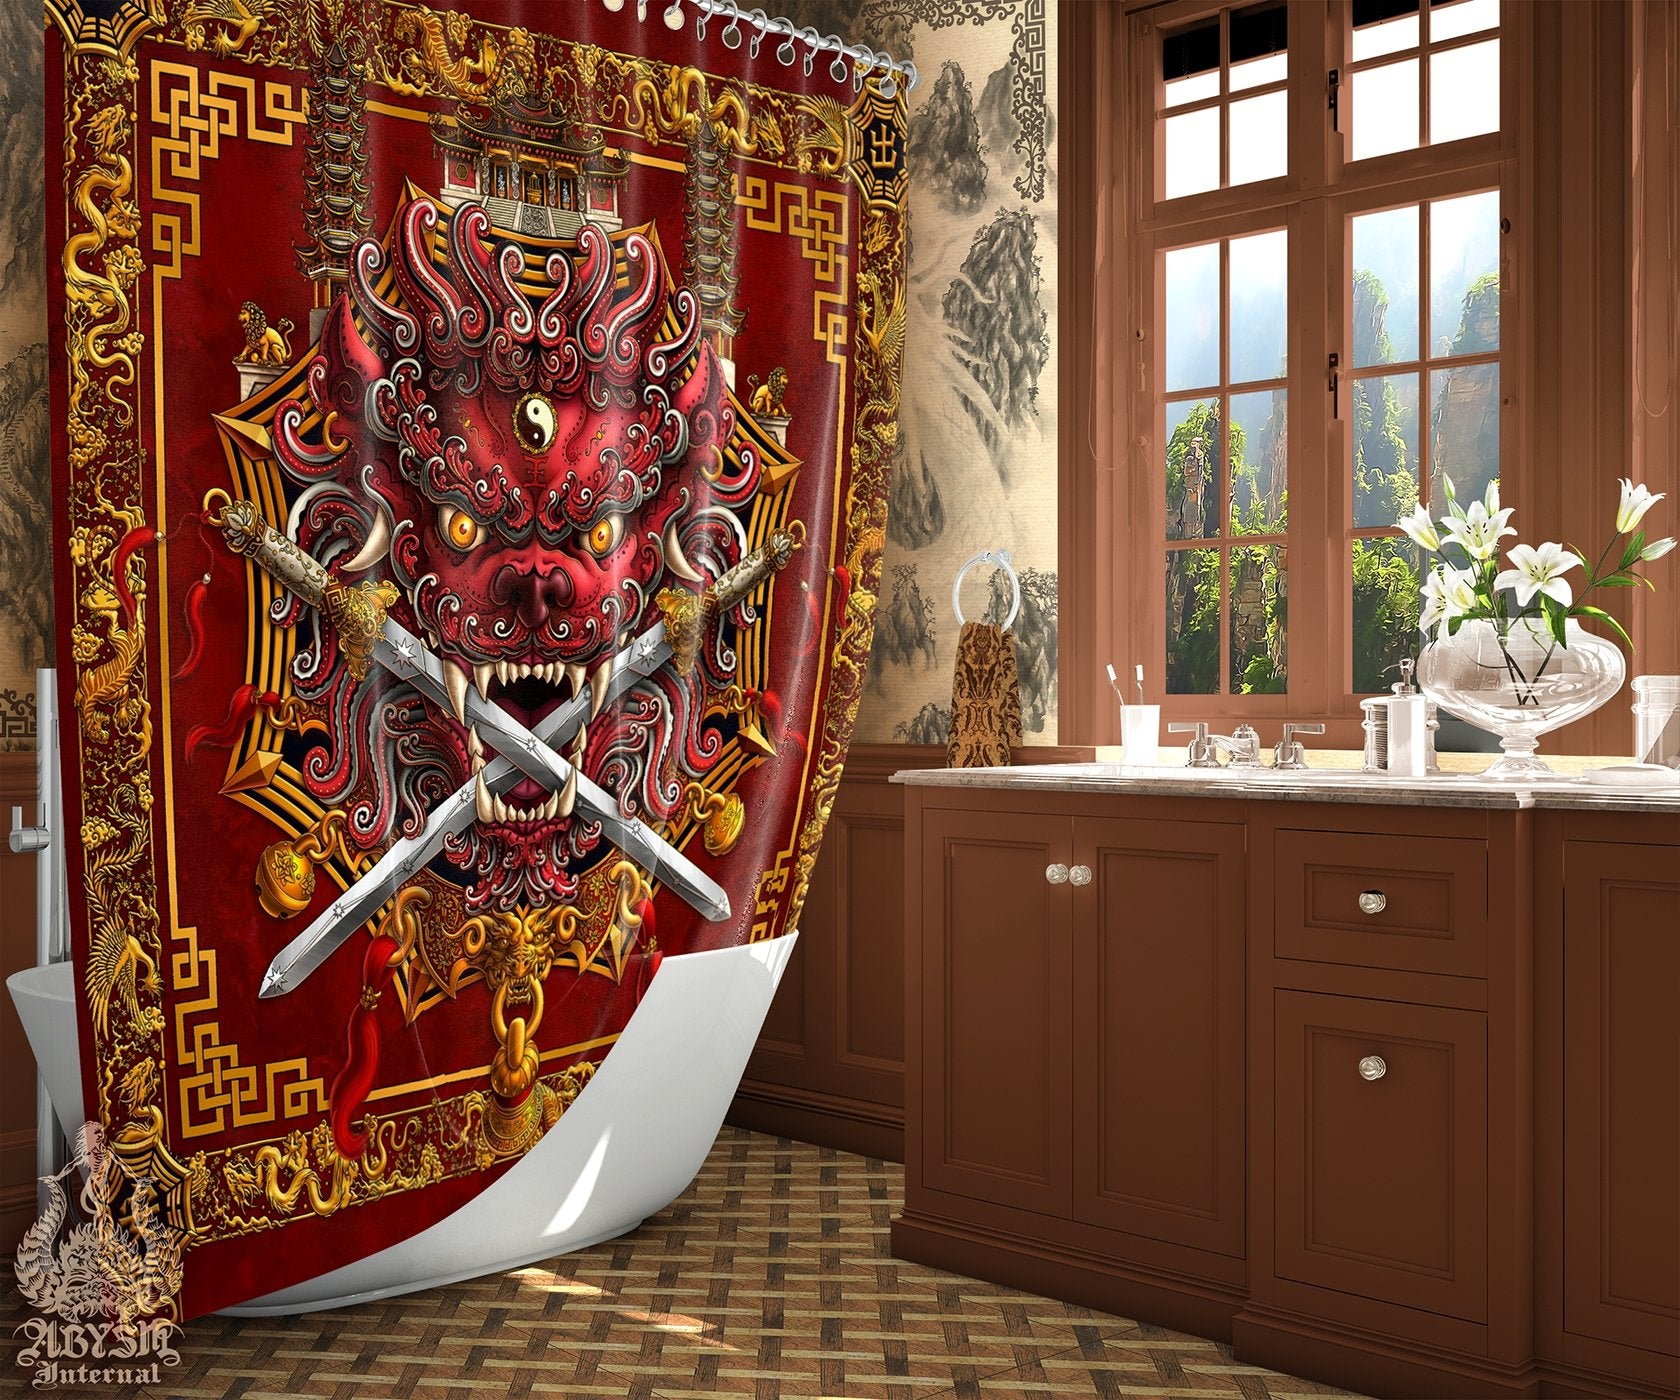 Lion Shower Curtain, Taiwan Sword Lion, Chinese Bathroom, Alternative Fantasy Decor, Asian Mythology - Red - Abysm Internal